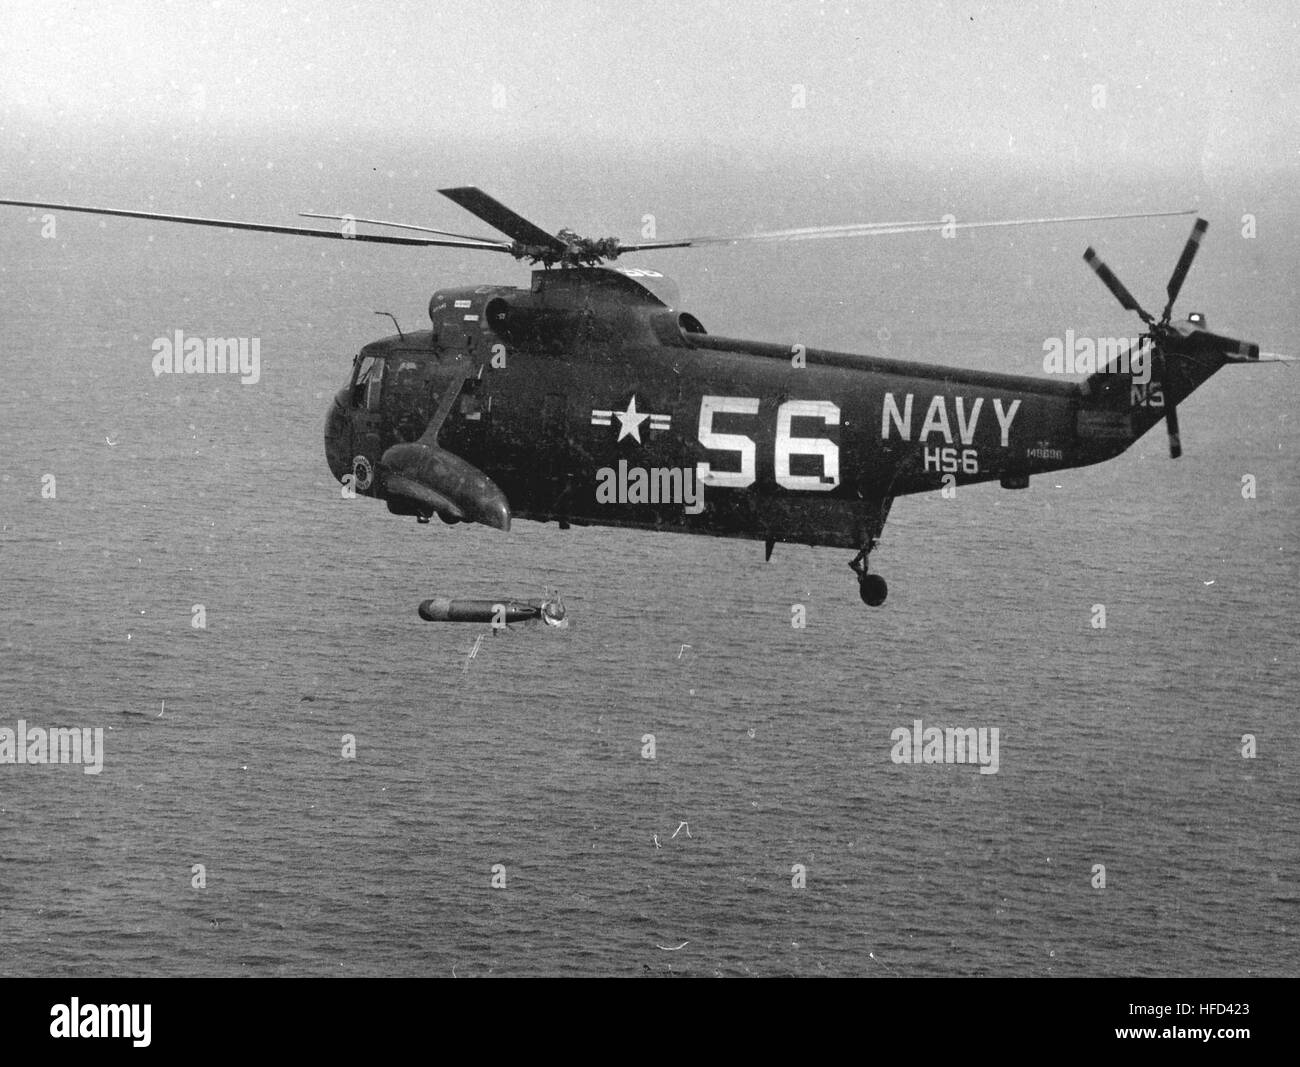 1/700 USN NAVY SH-3 Sea King Photo-Etched PE 70052 12 Aircrafts 